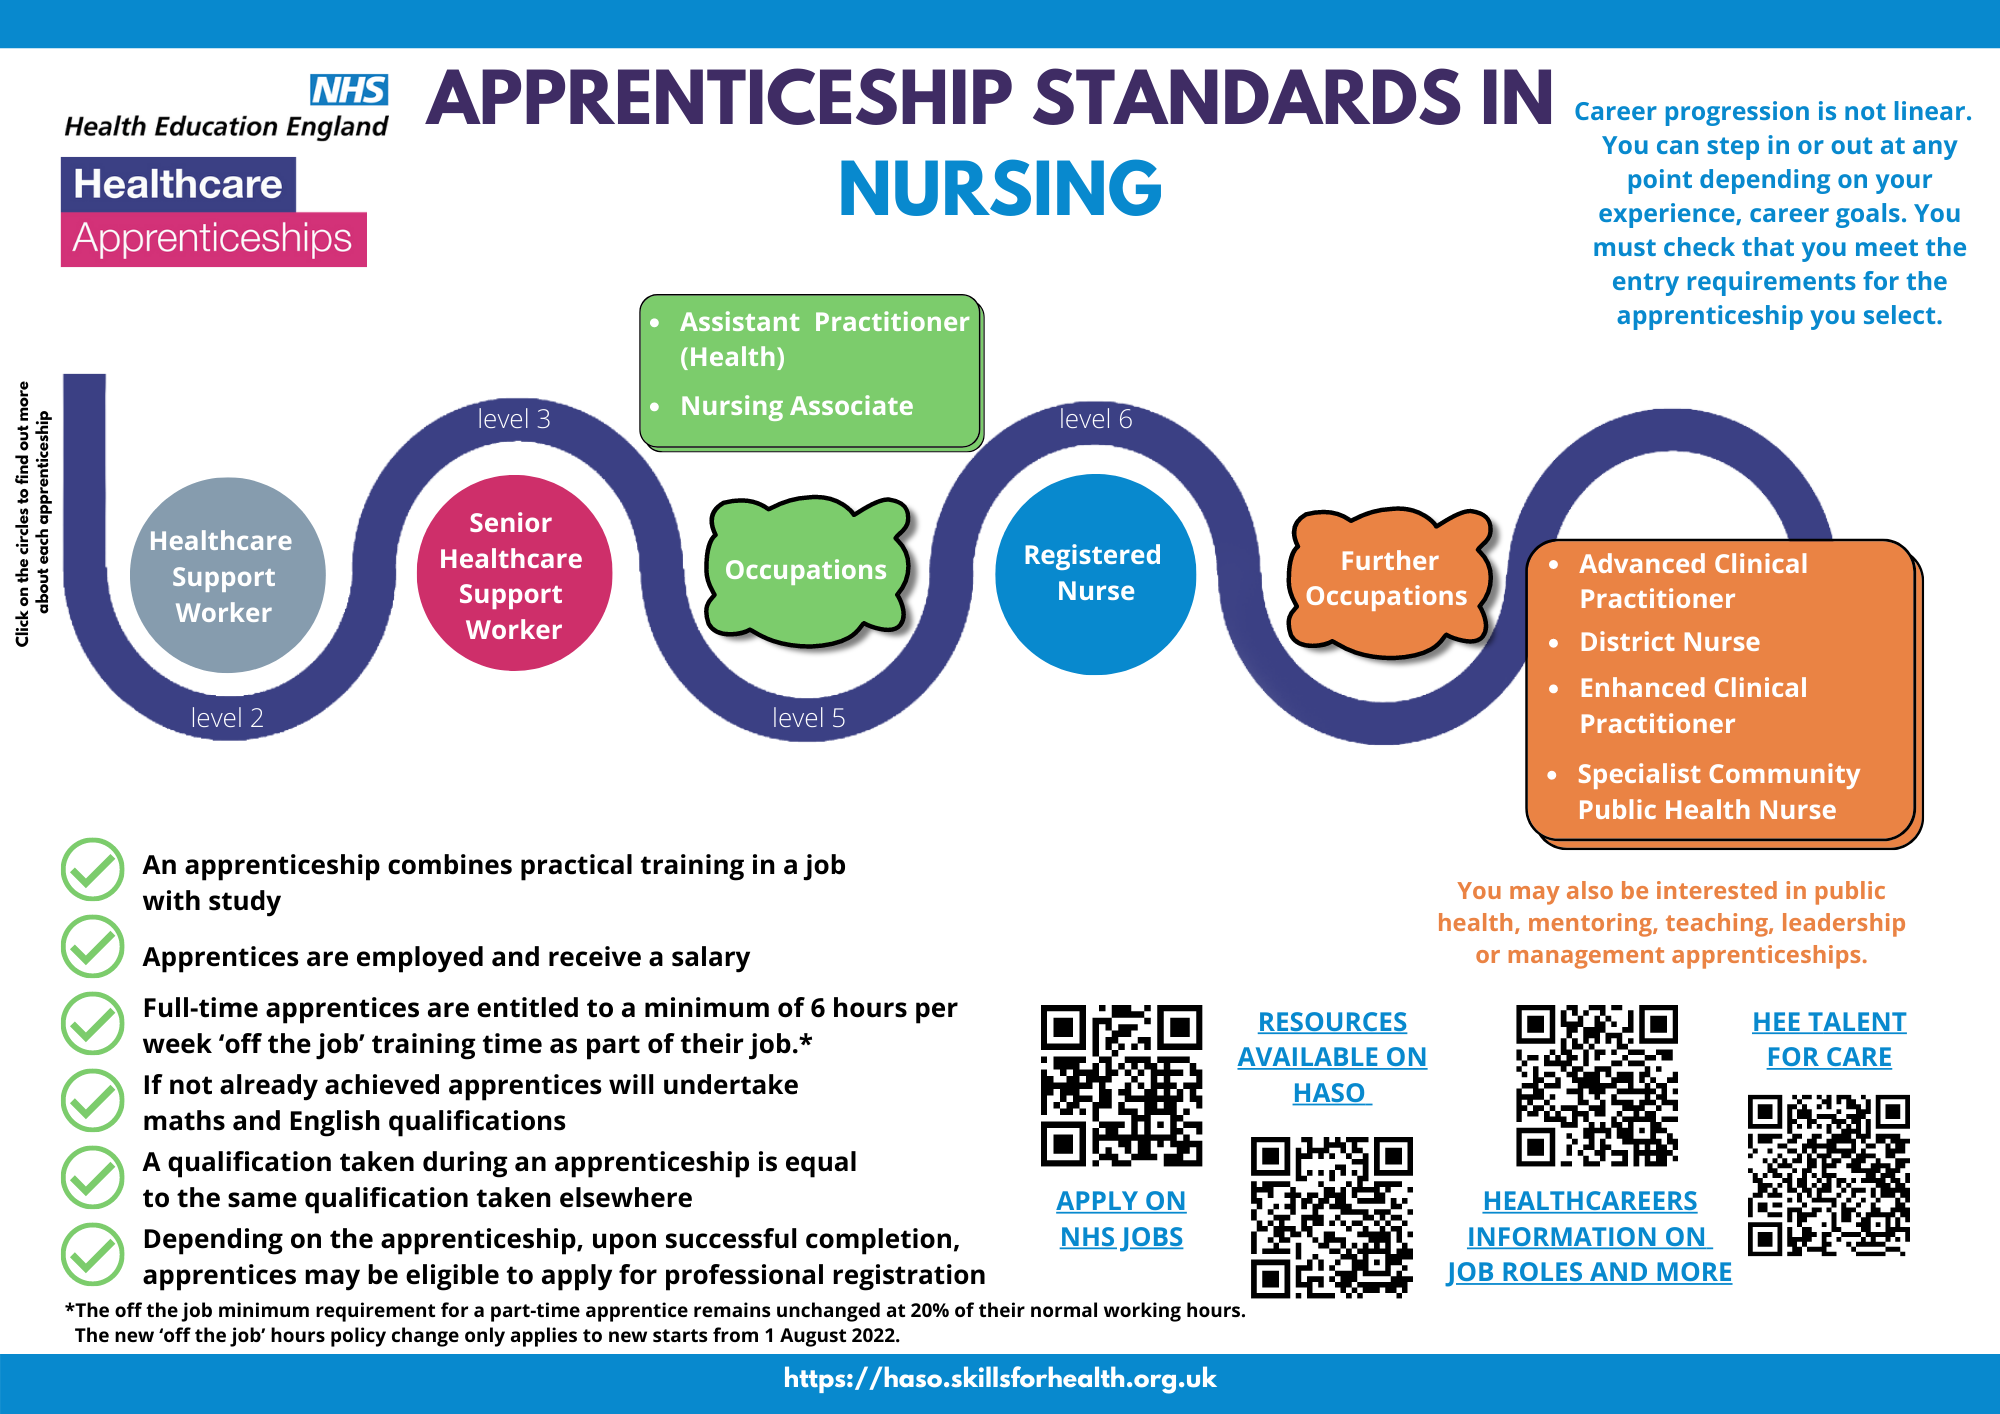 Nursing Apprenticeship Factsheet which shows the relevant apprenticeships. This information can also be found on the nursing page: https://haso.skillsforhealth.org.uk/nursing/